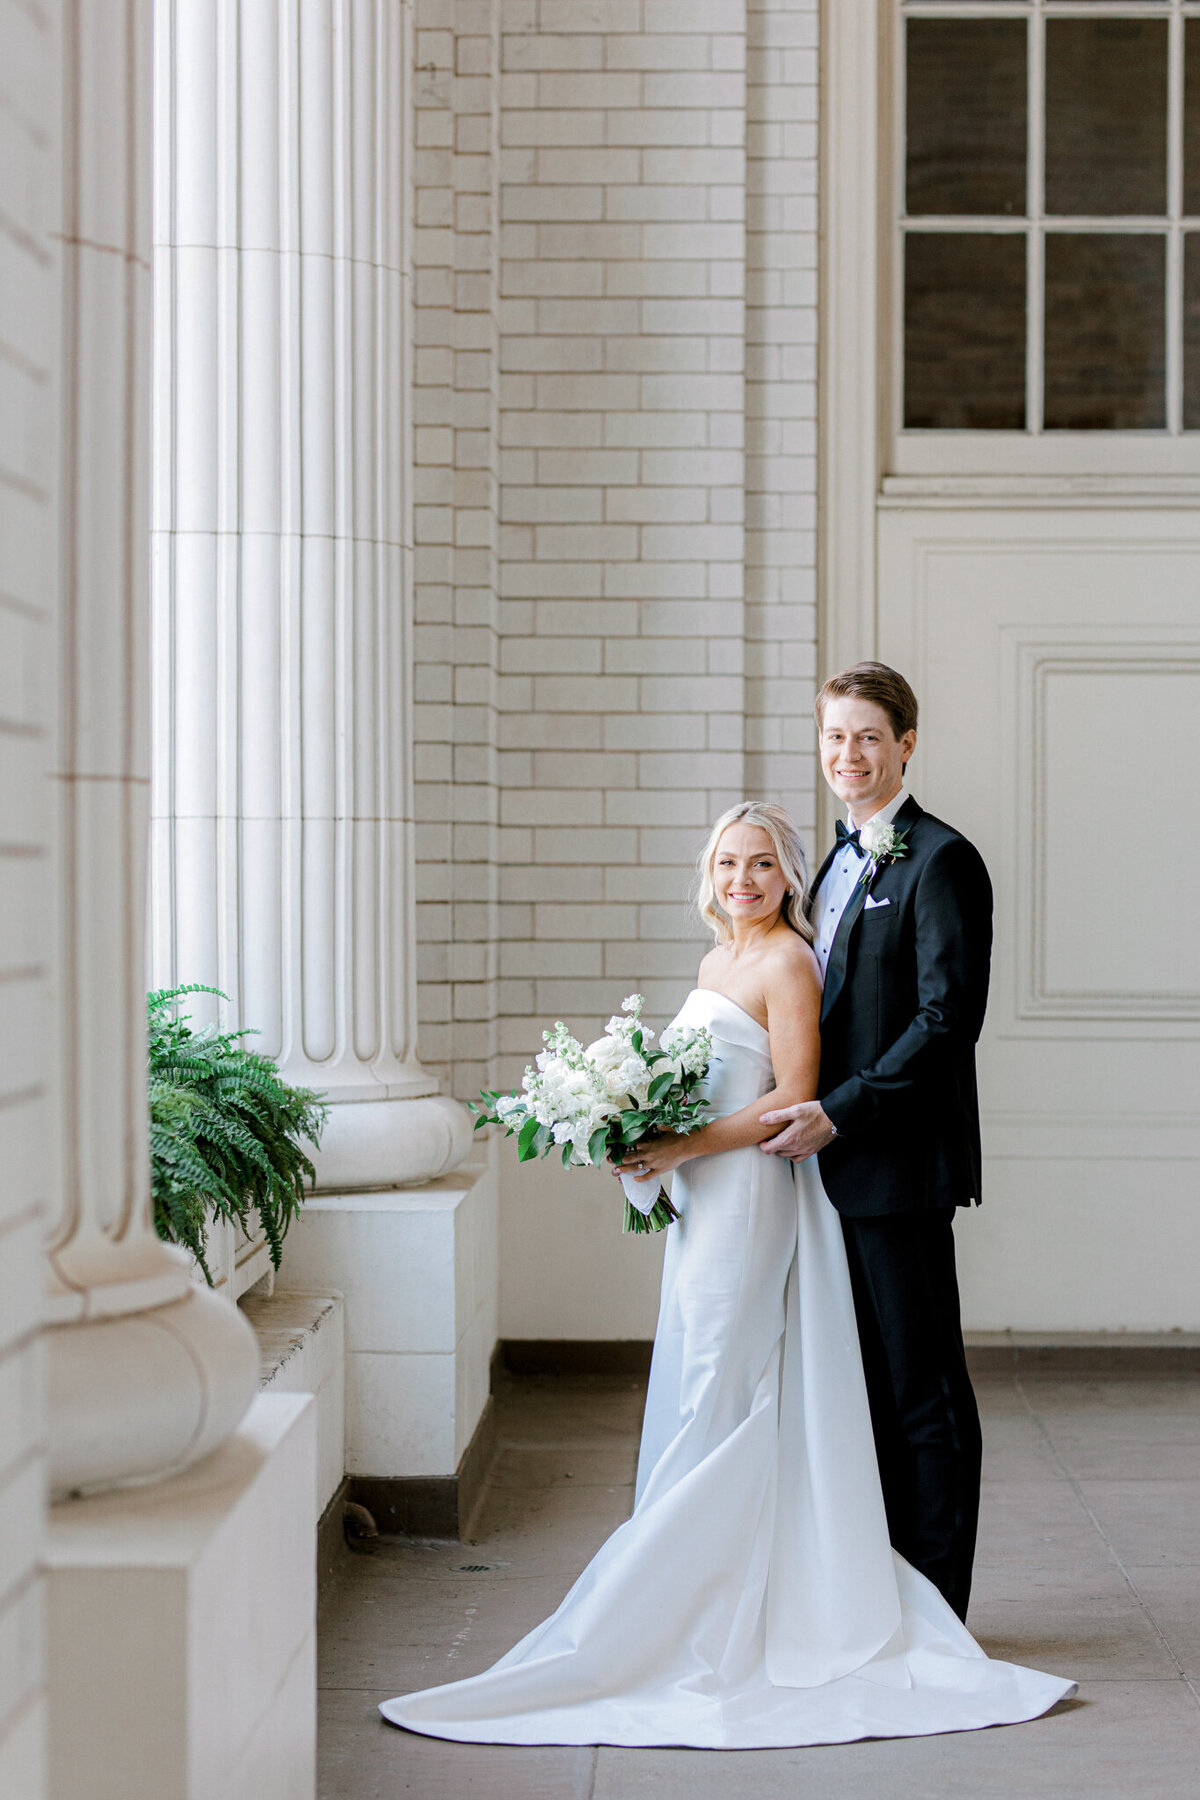 Madison & Michael's Wedding at Union Station | Dallas Wedding Photographer | Sami Kathryn Photography-68